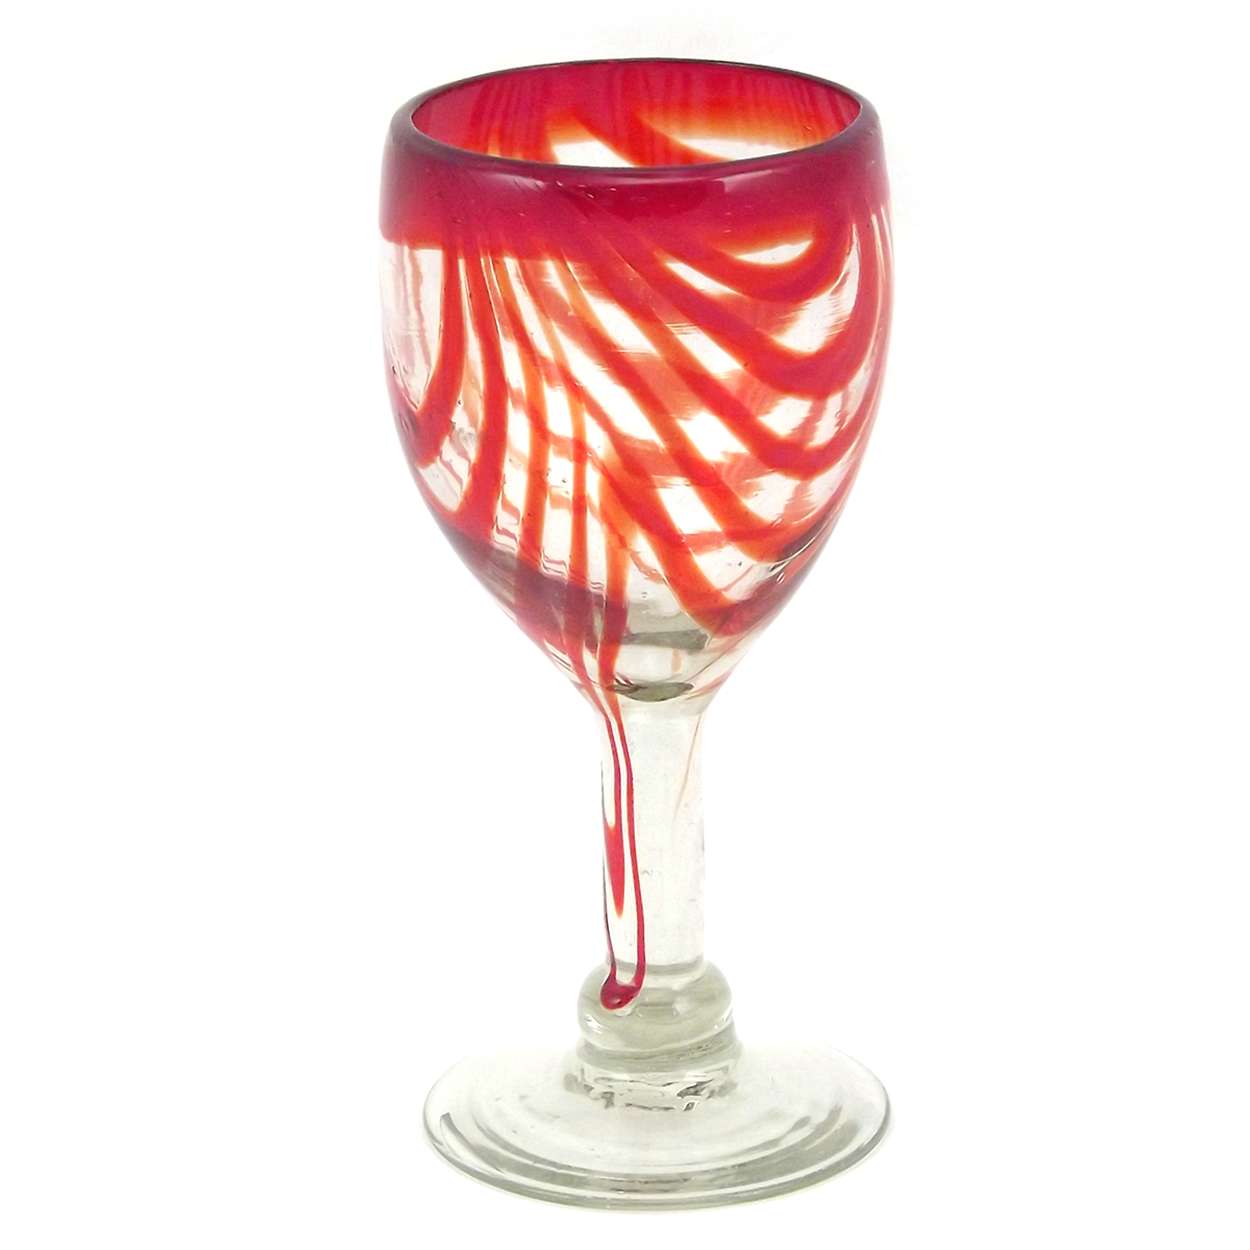 Blown Glass Swirl - Red Wine Glass - 9 oz